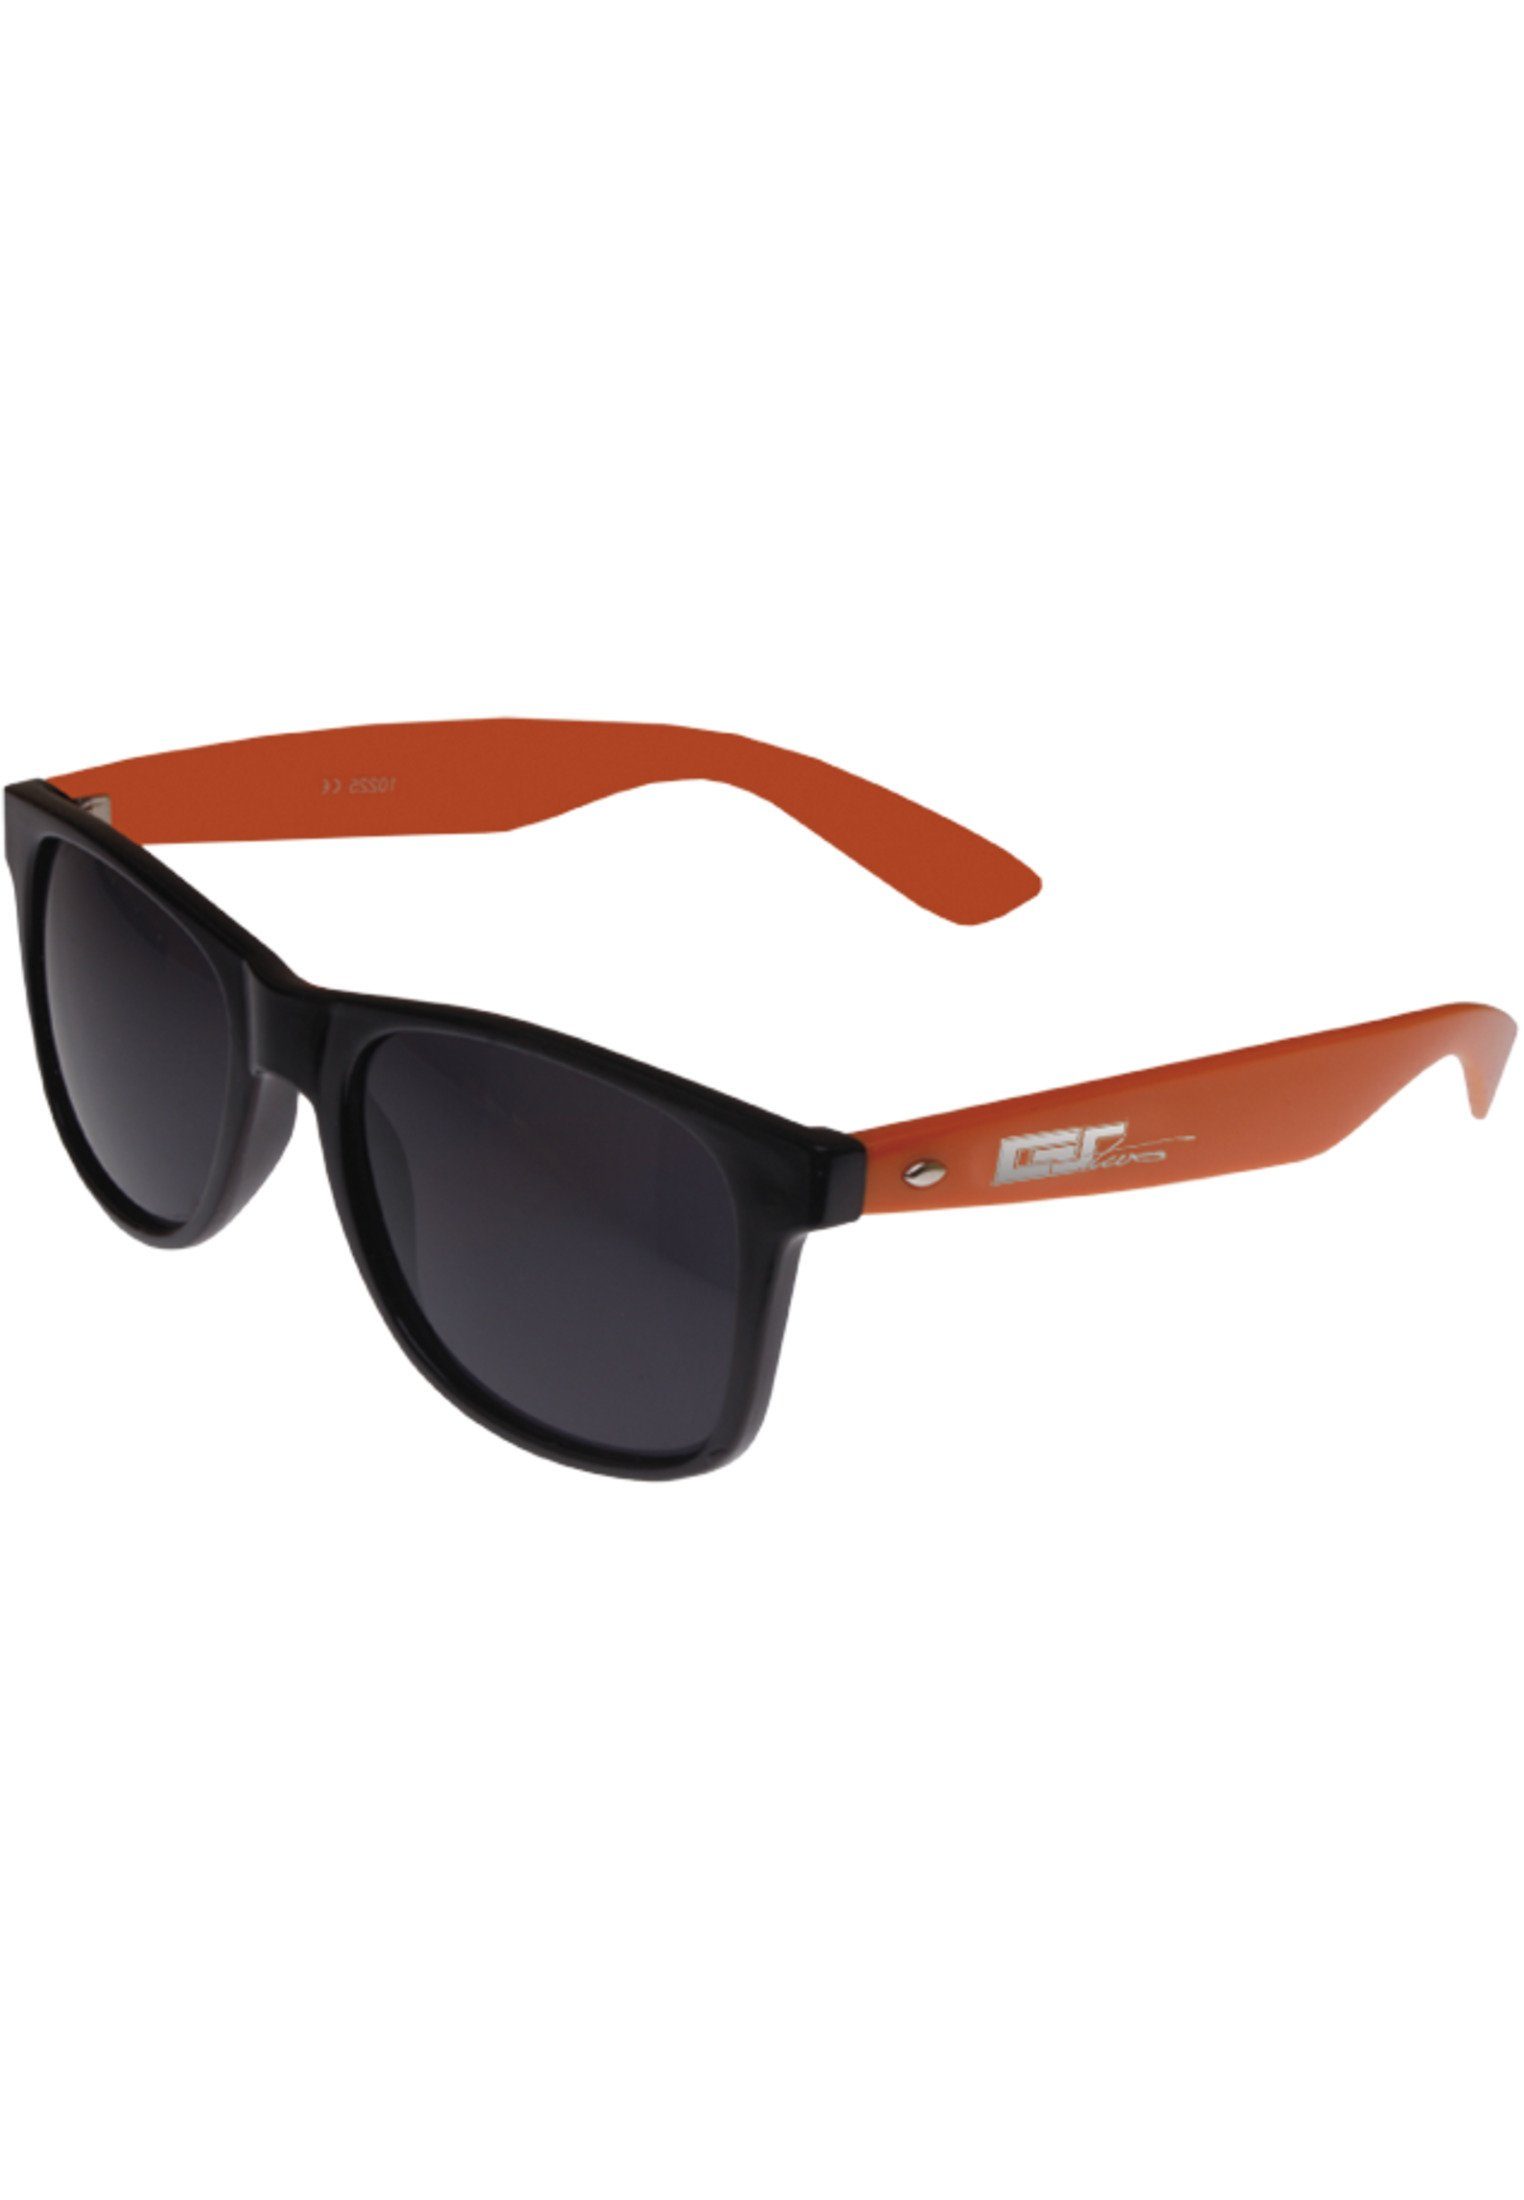 MSTRDS Sonnenbrille Accessoires Groove Shades GStwo black/orange